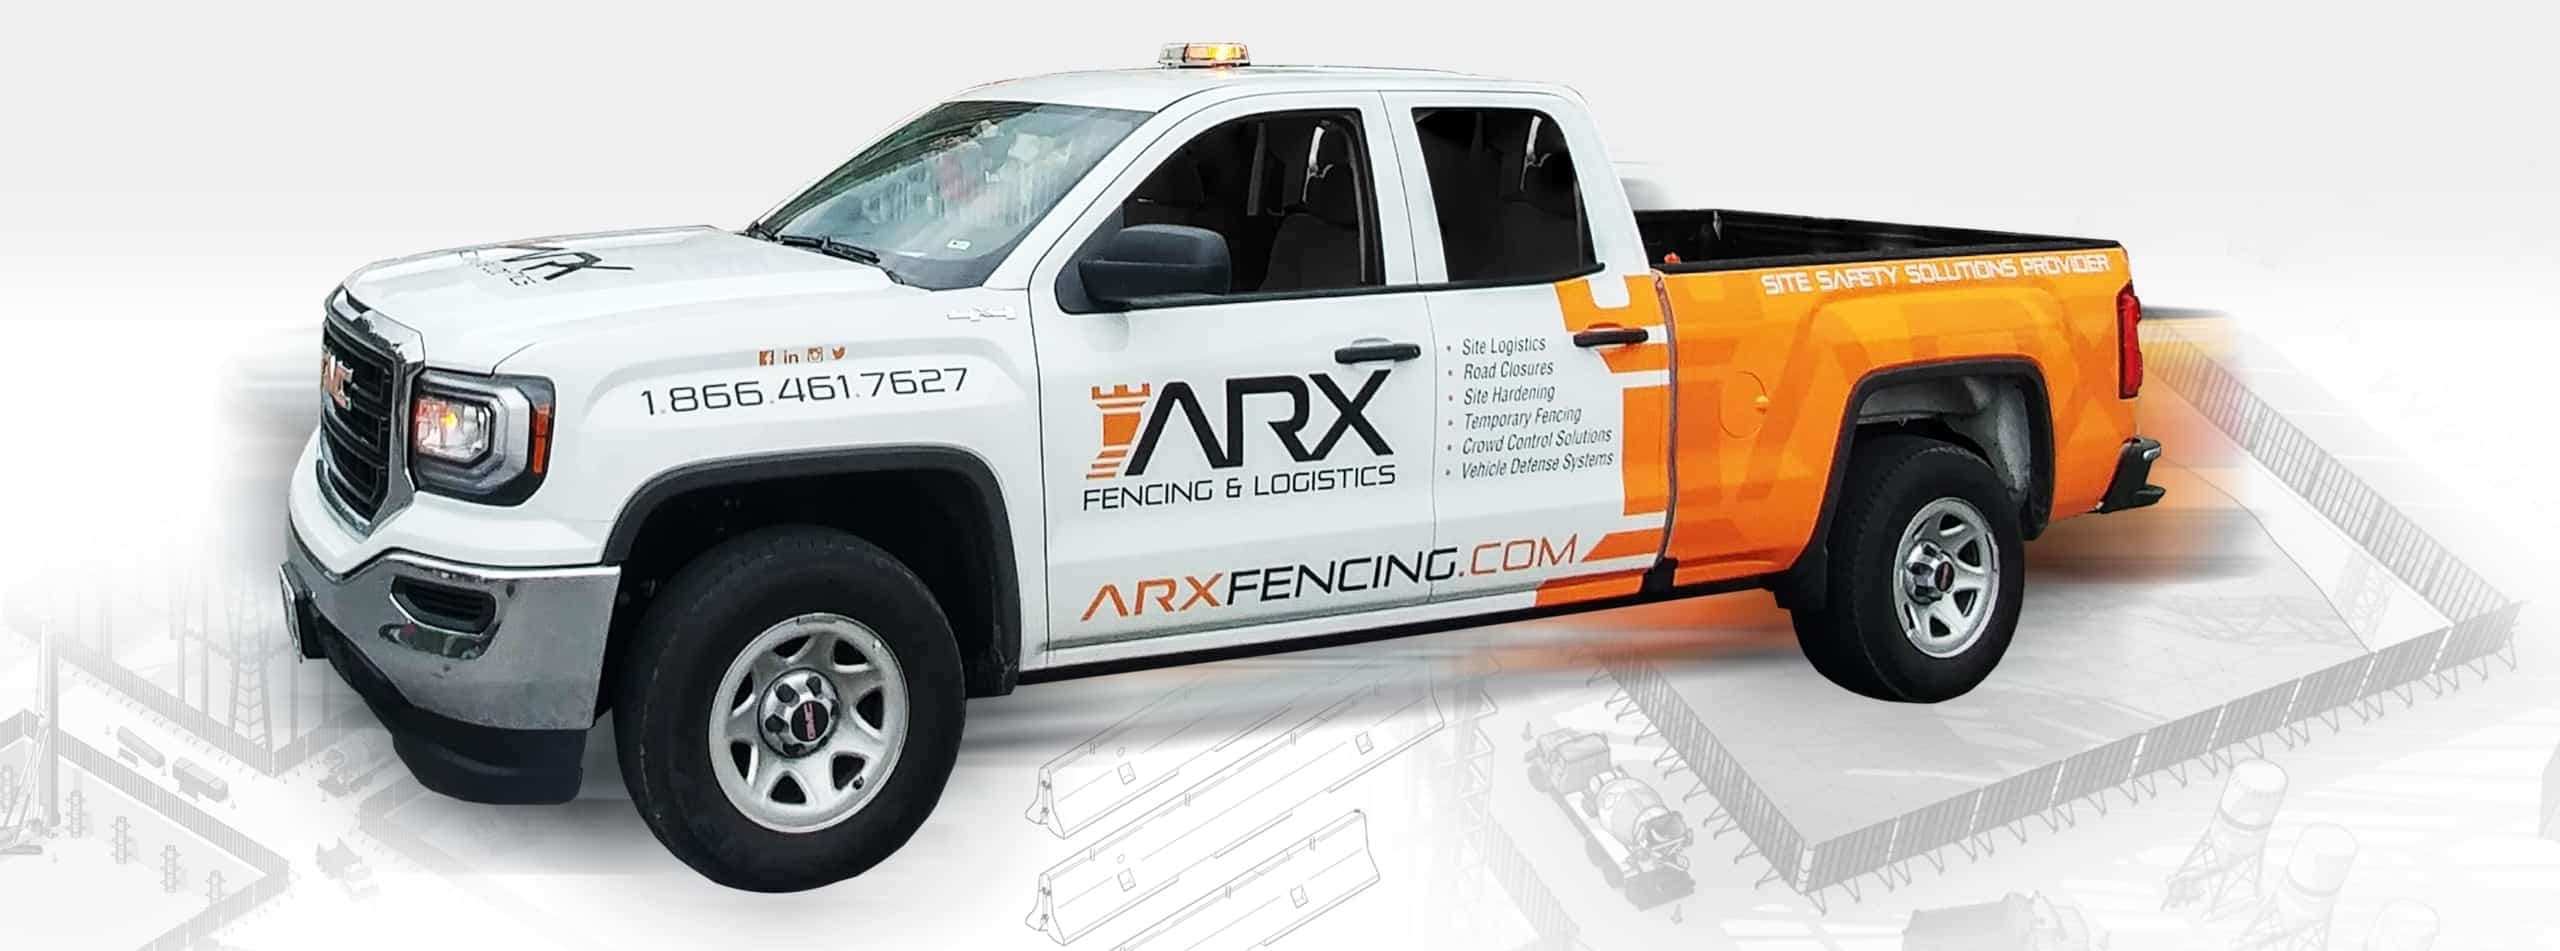 ARX Fencing & Logistics - Ottawa